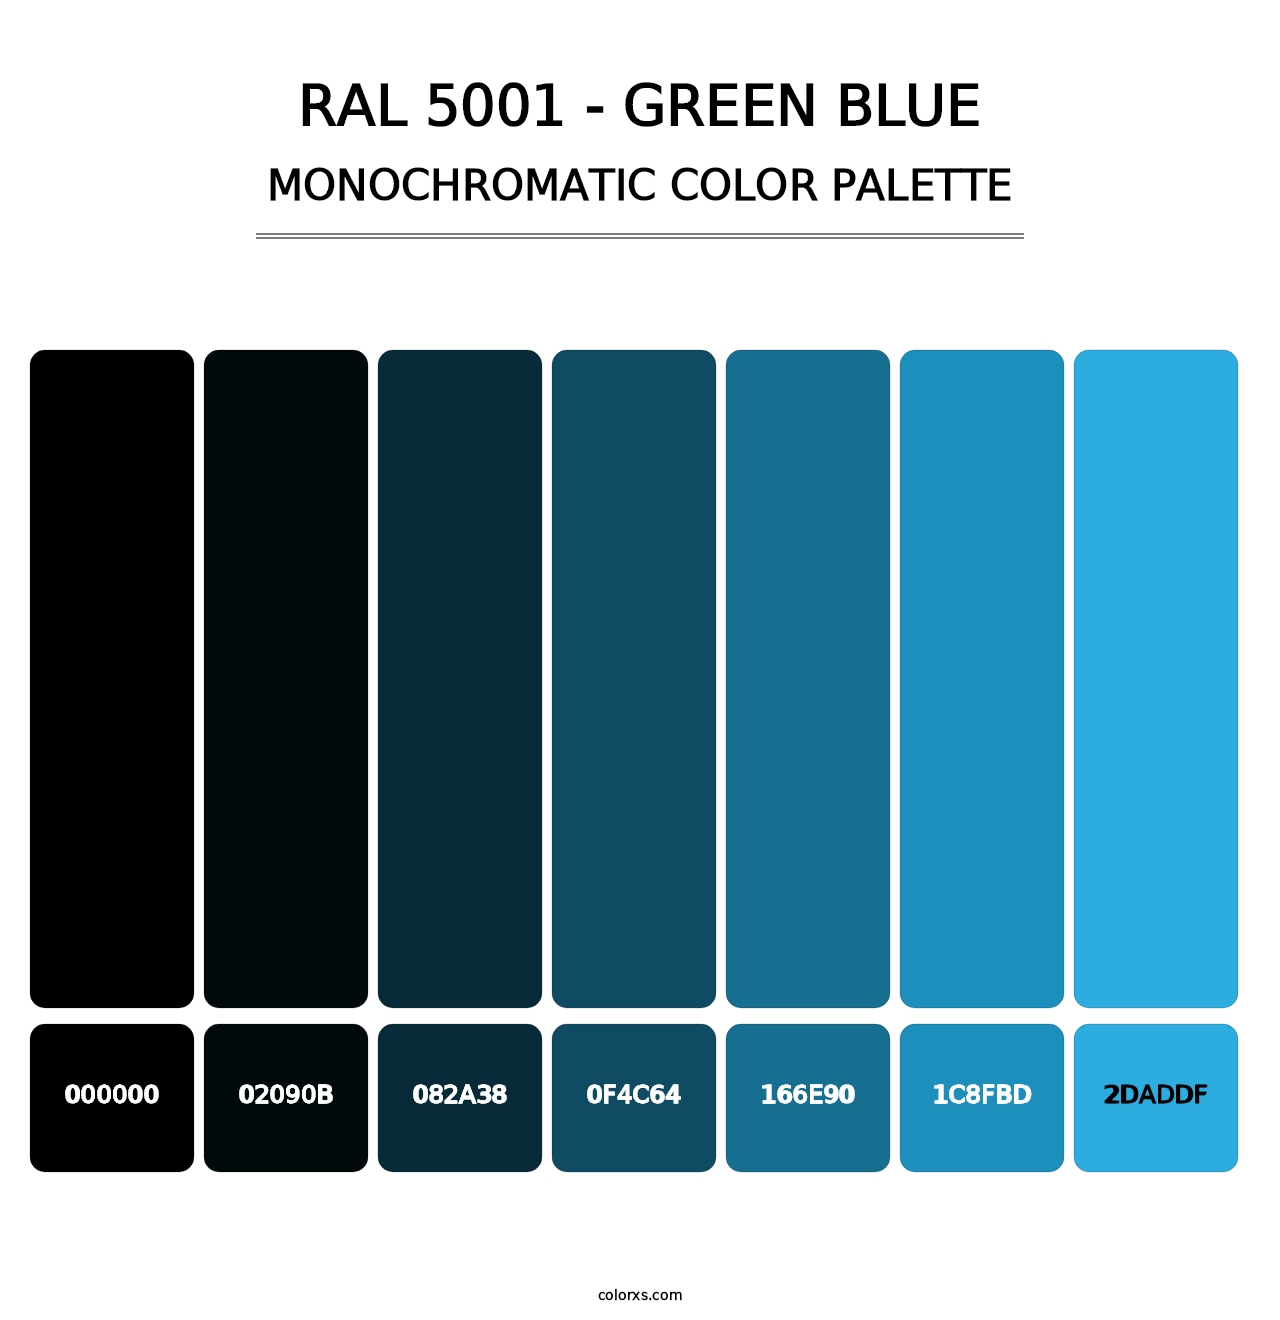 RAL 5001 - Green Blue - Monochromatic Color Palette